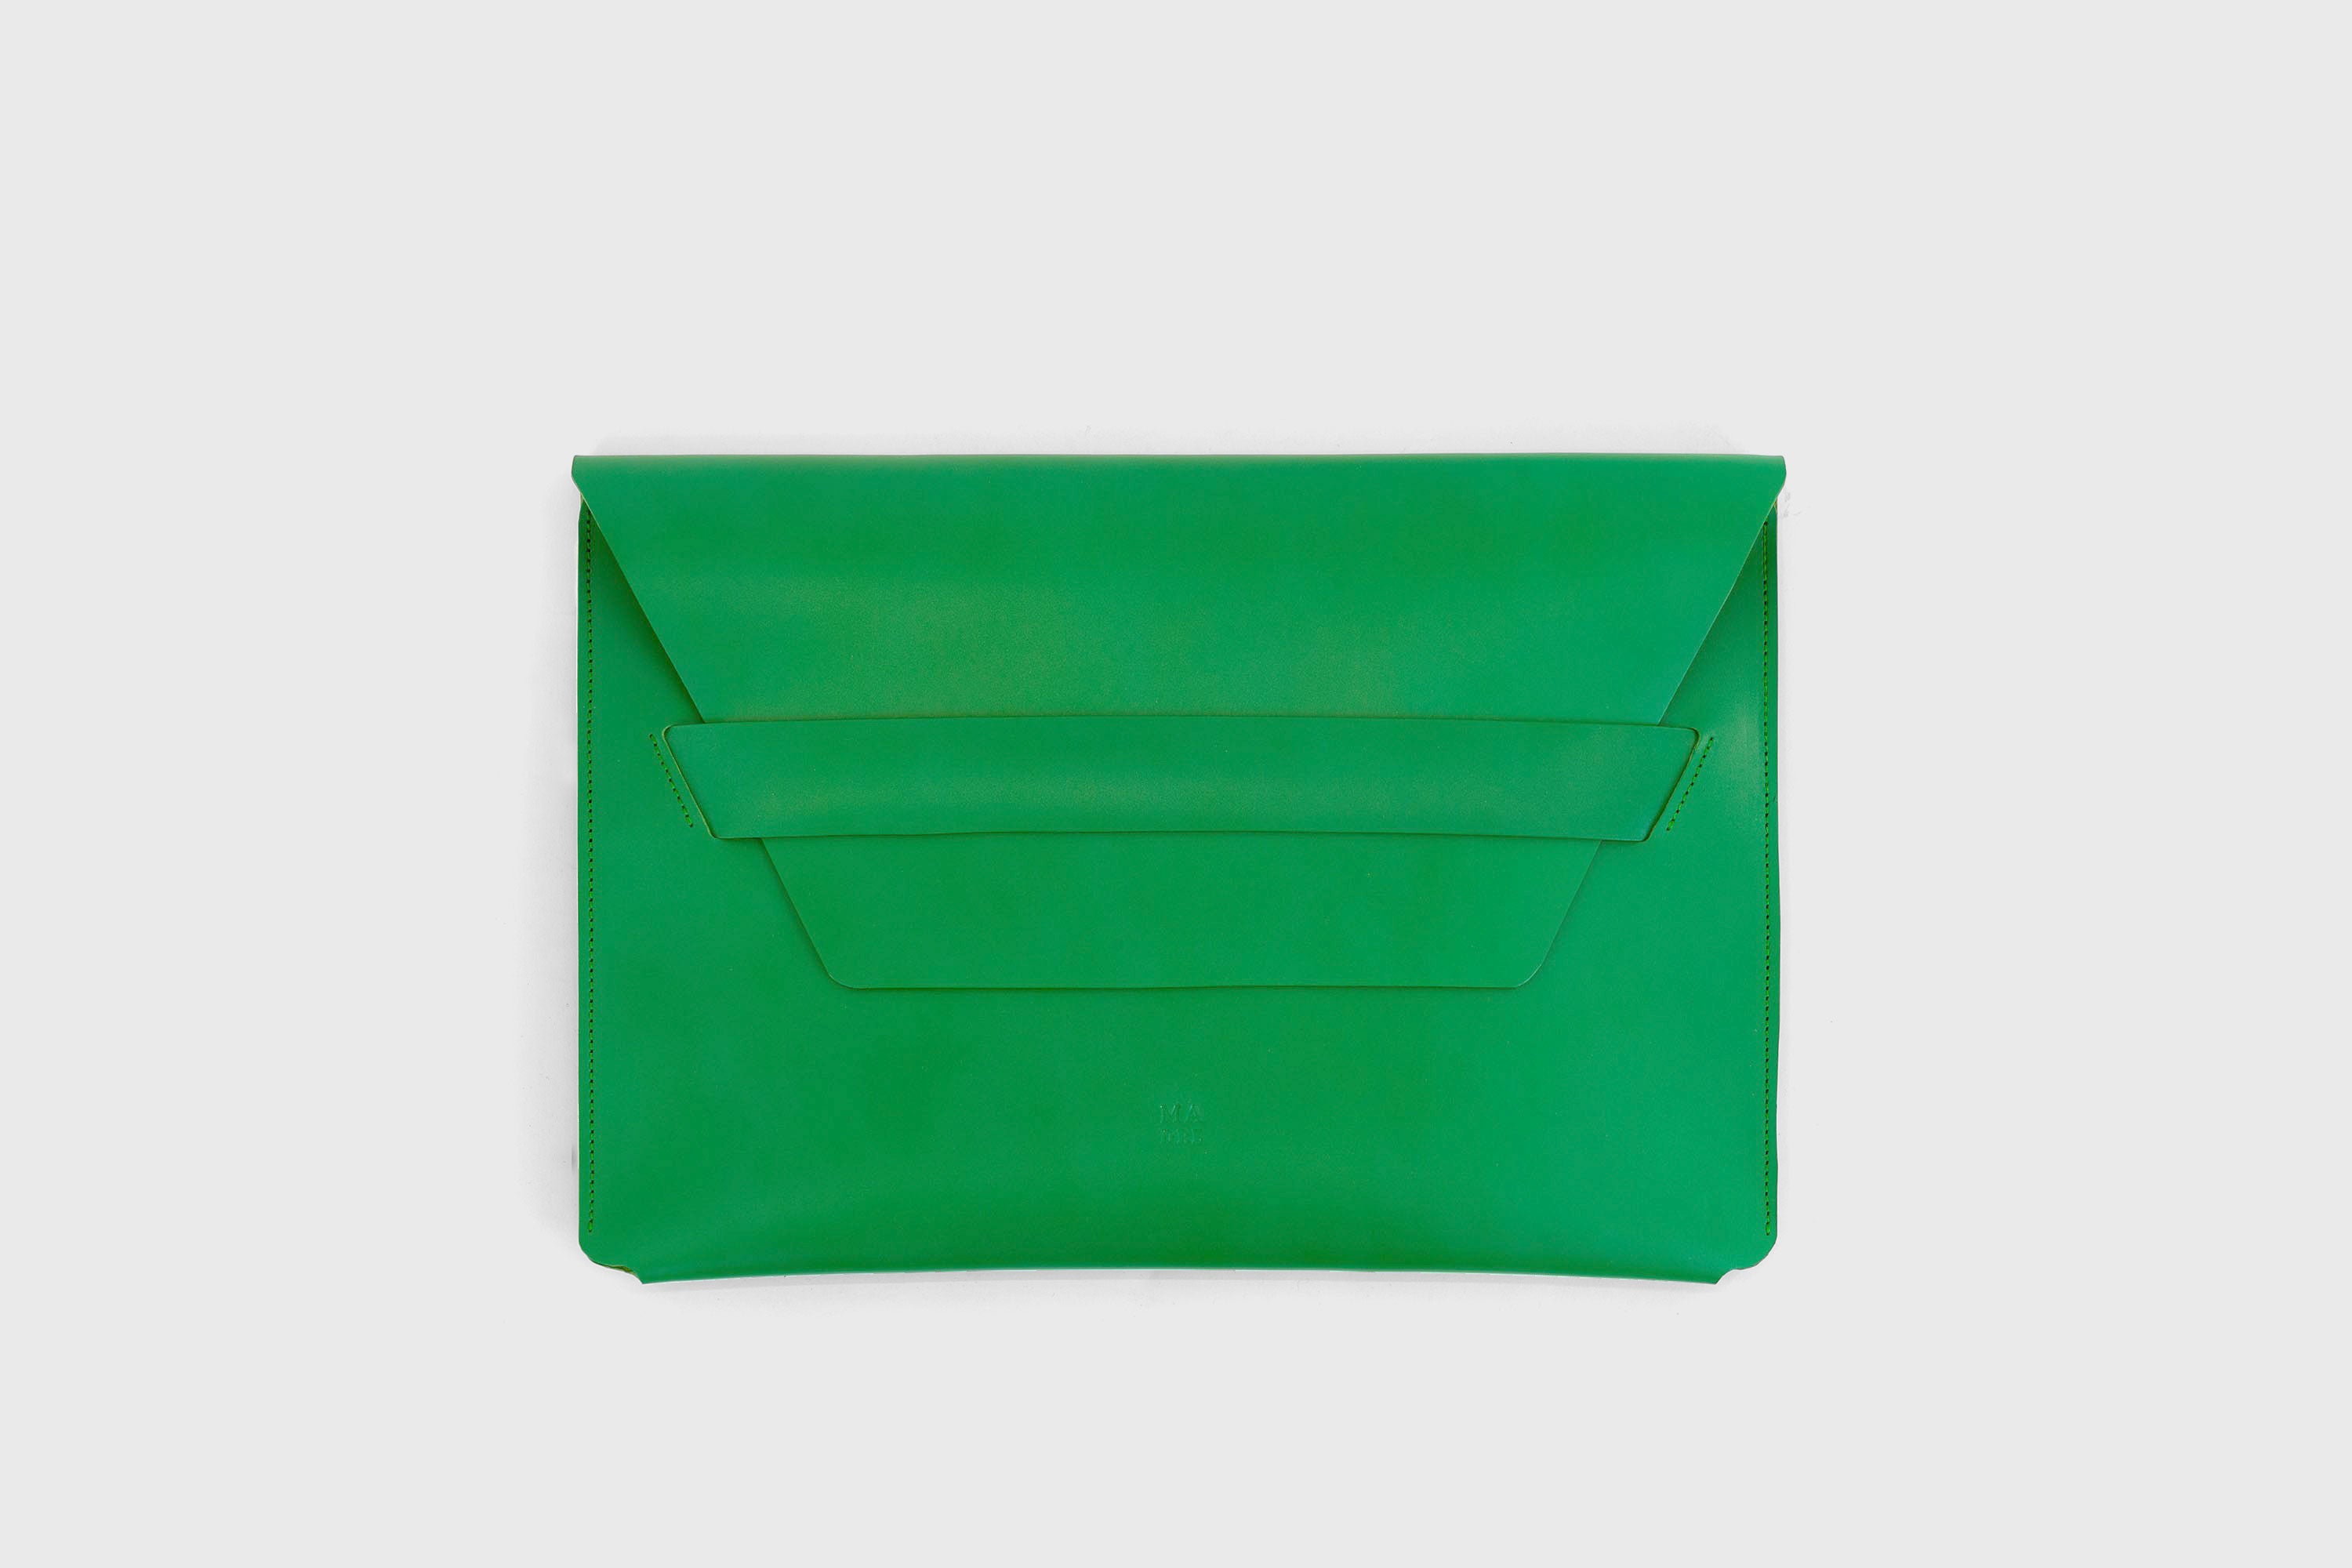 Leather Sleeve Grass Green for MacBook Pro 15 Inch Minimalis Premium Design Atelier Madre Manuel Dreesmann Barcelona Spain